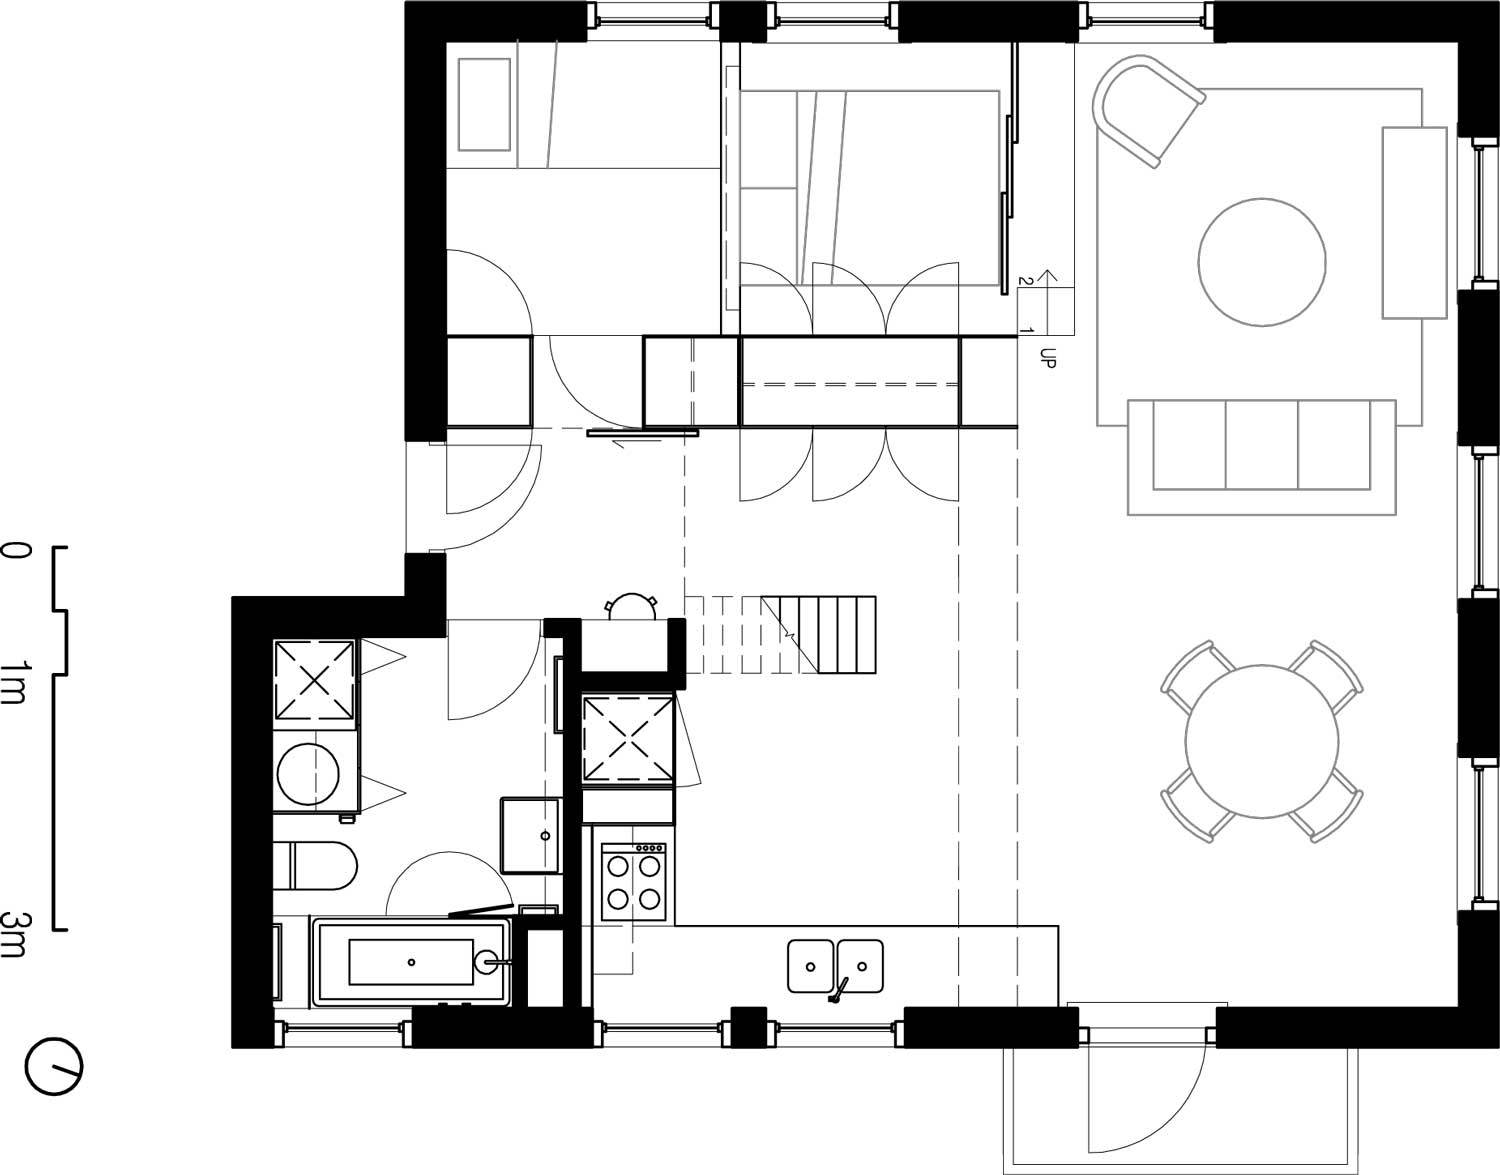 Flinders_Lane_Apartment-Clare_Cousins_Architects-16.jpg